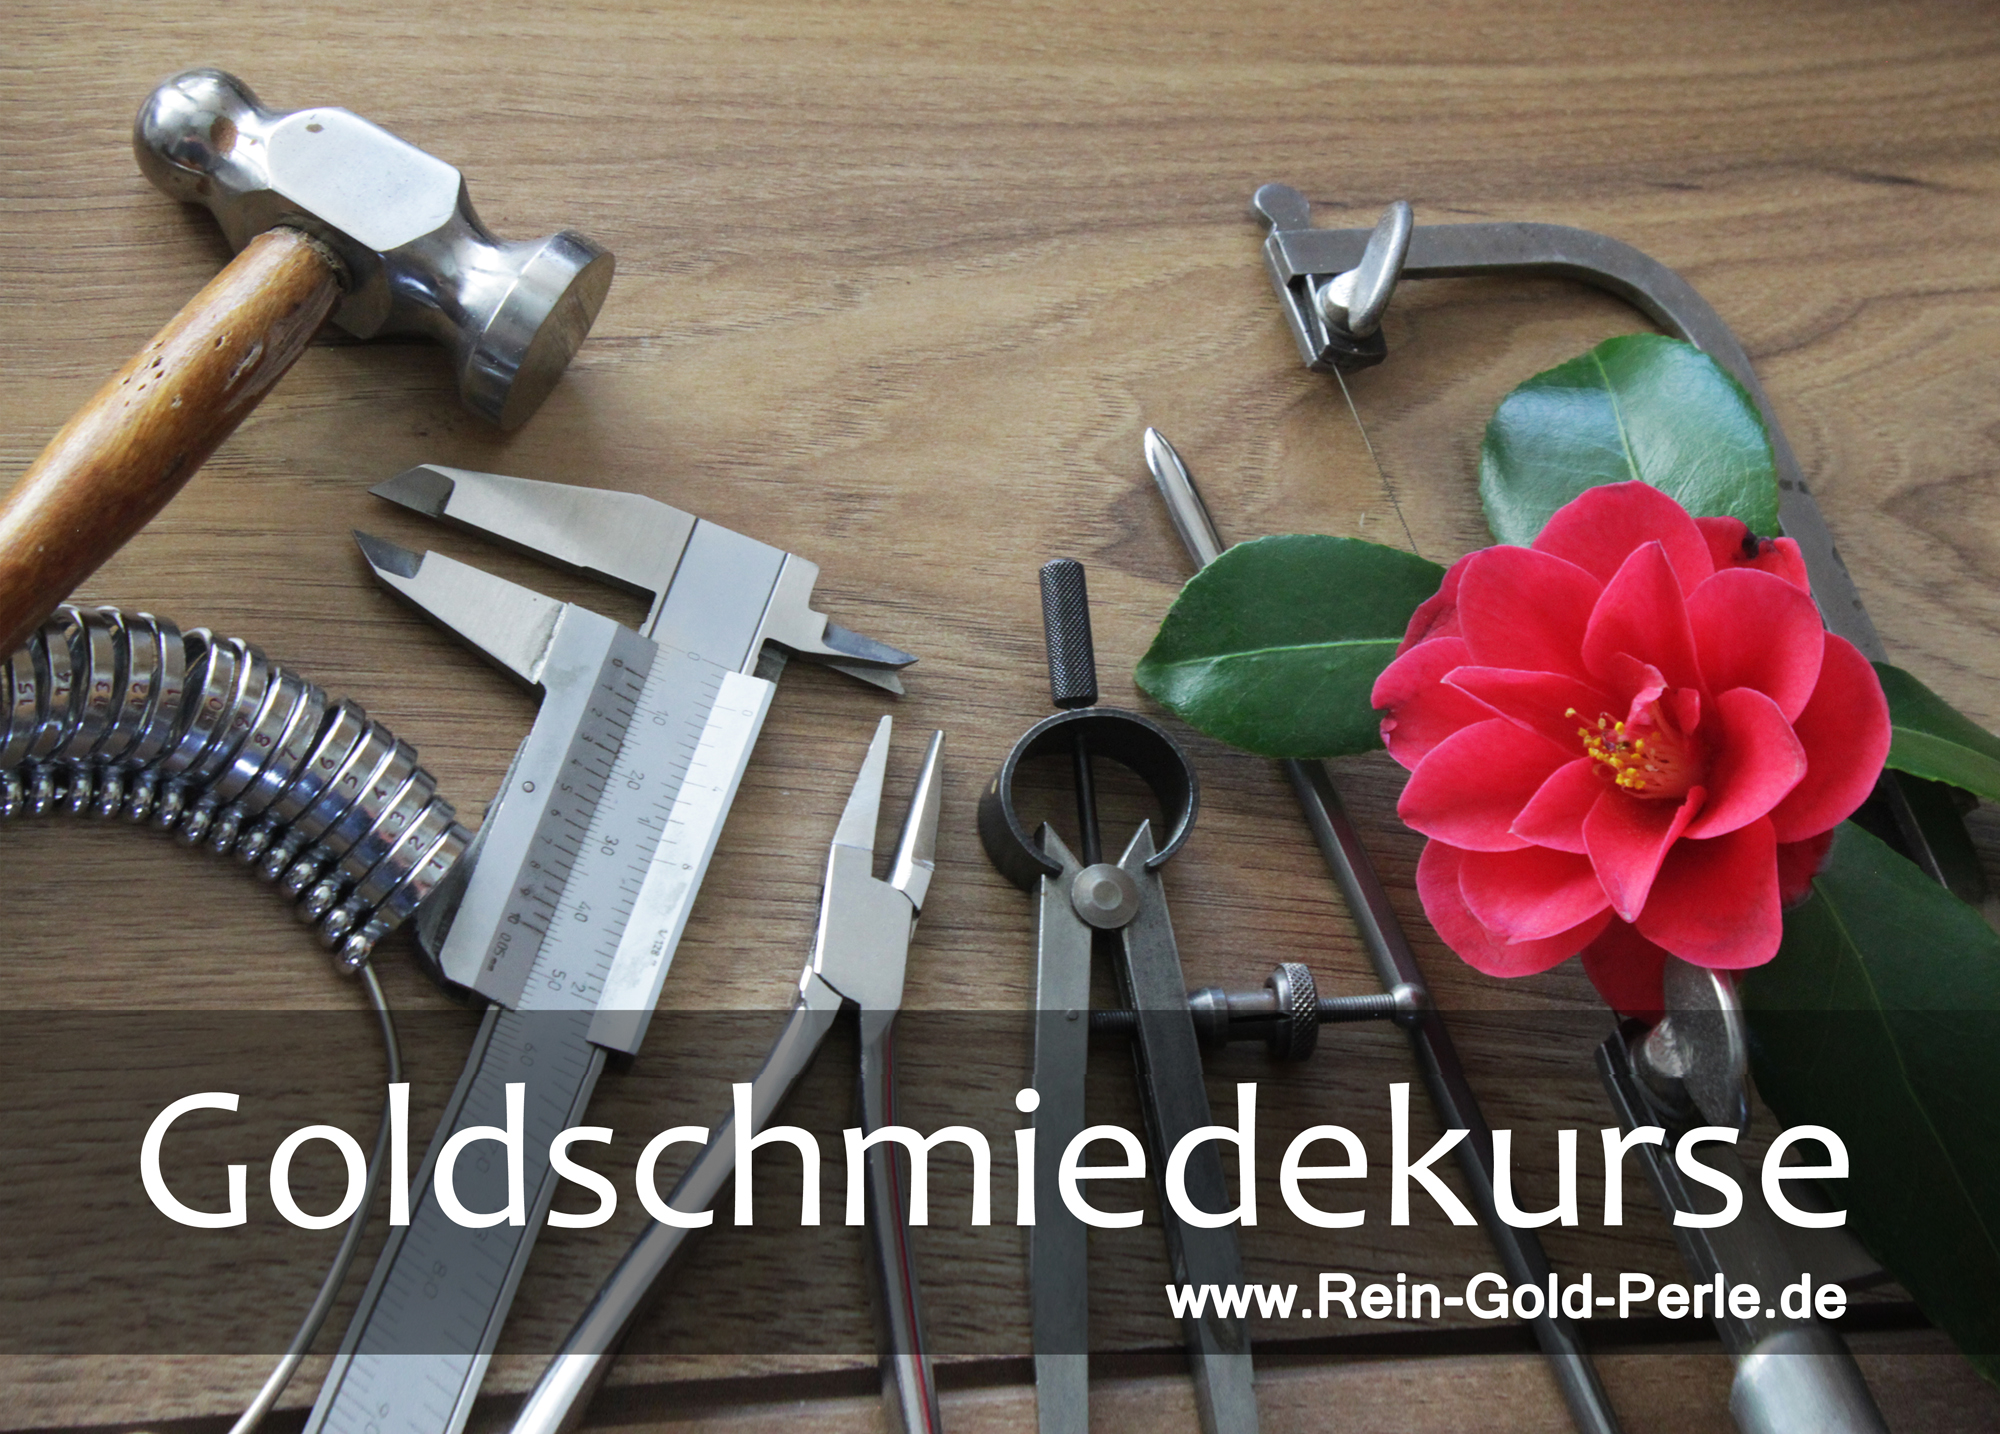 Goldschmiedekurse bei Rein Gold Perle - Katharina Baumann, für alle kreativen Interessenten.